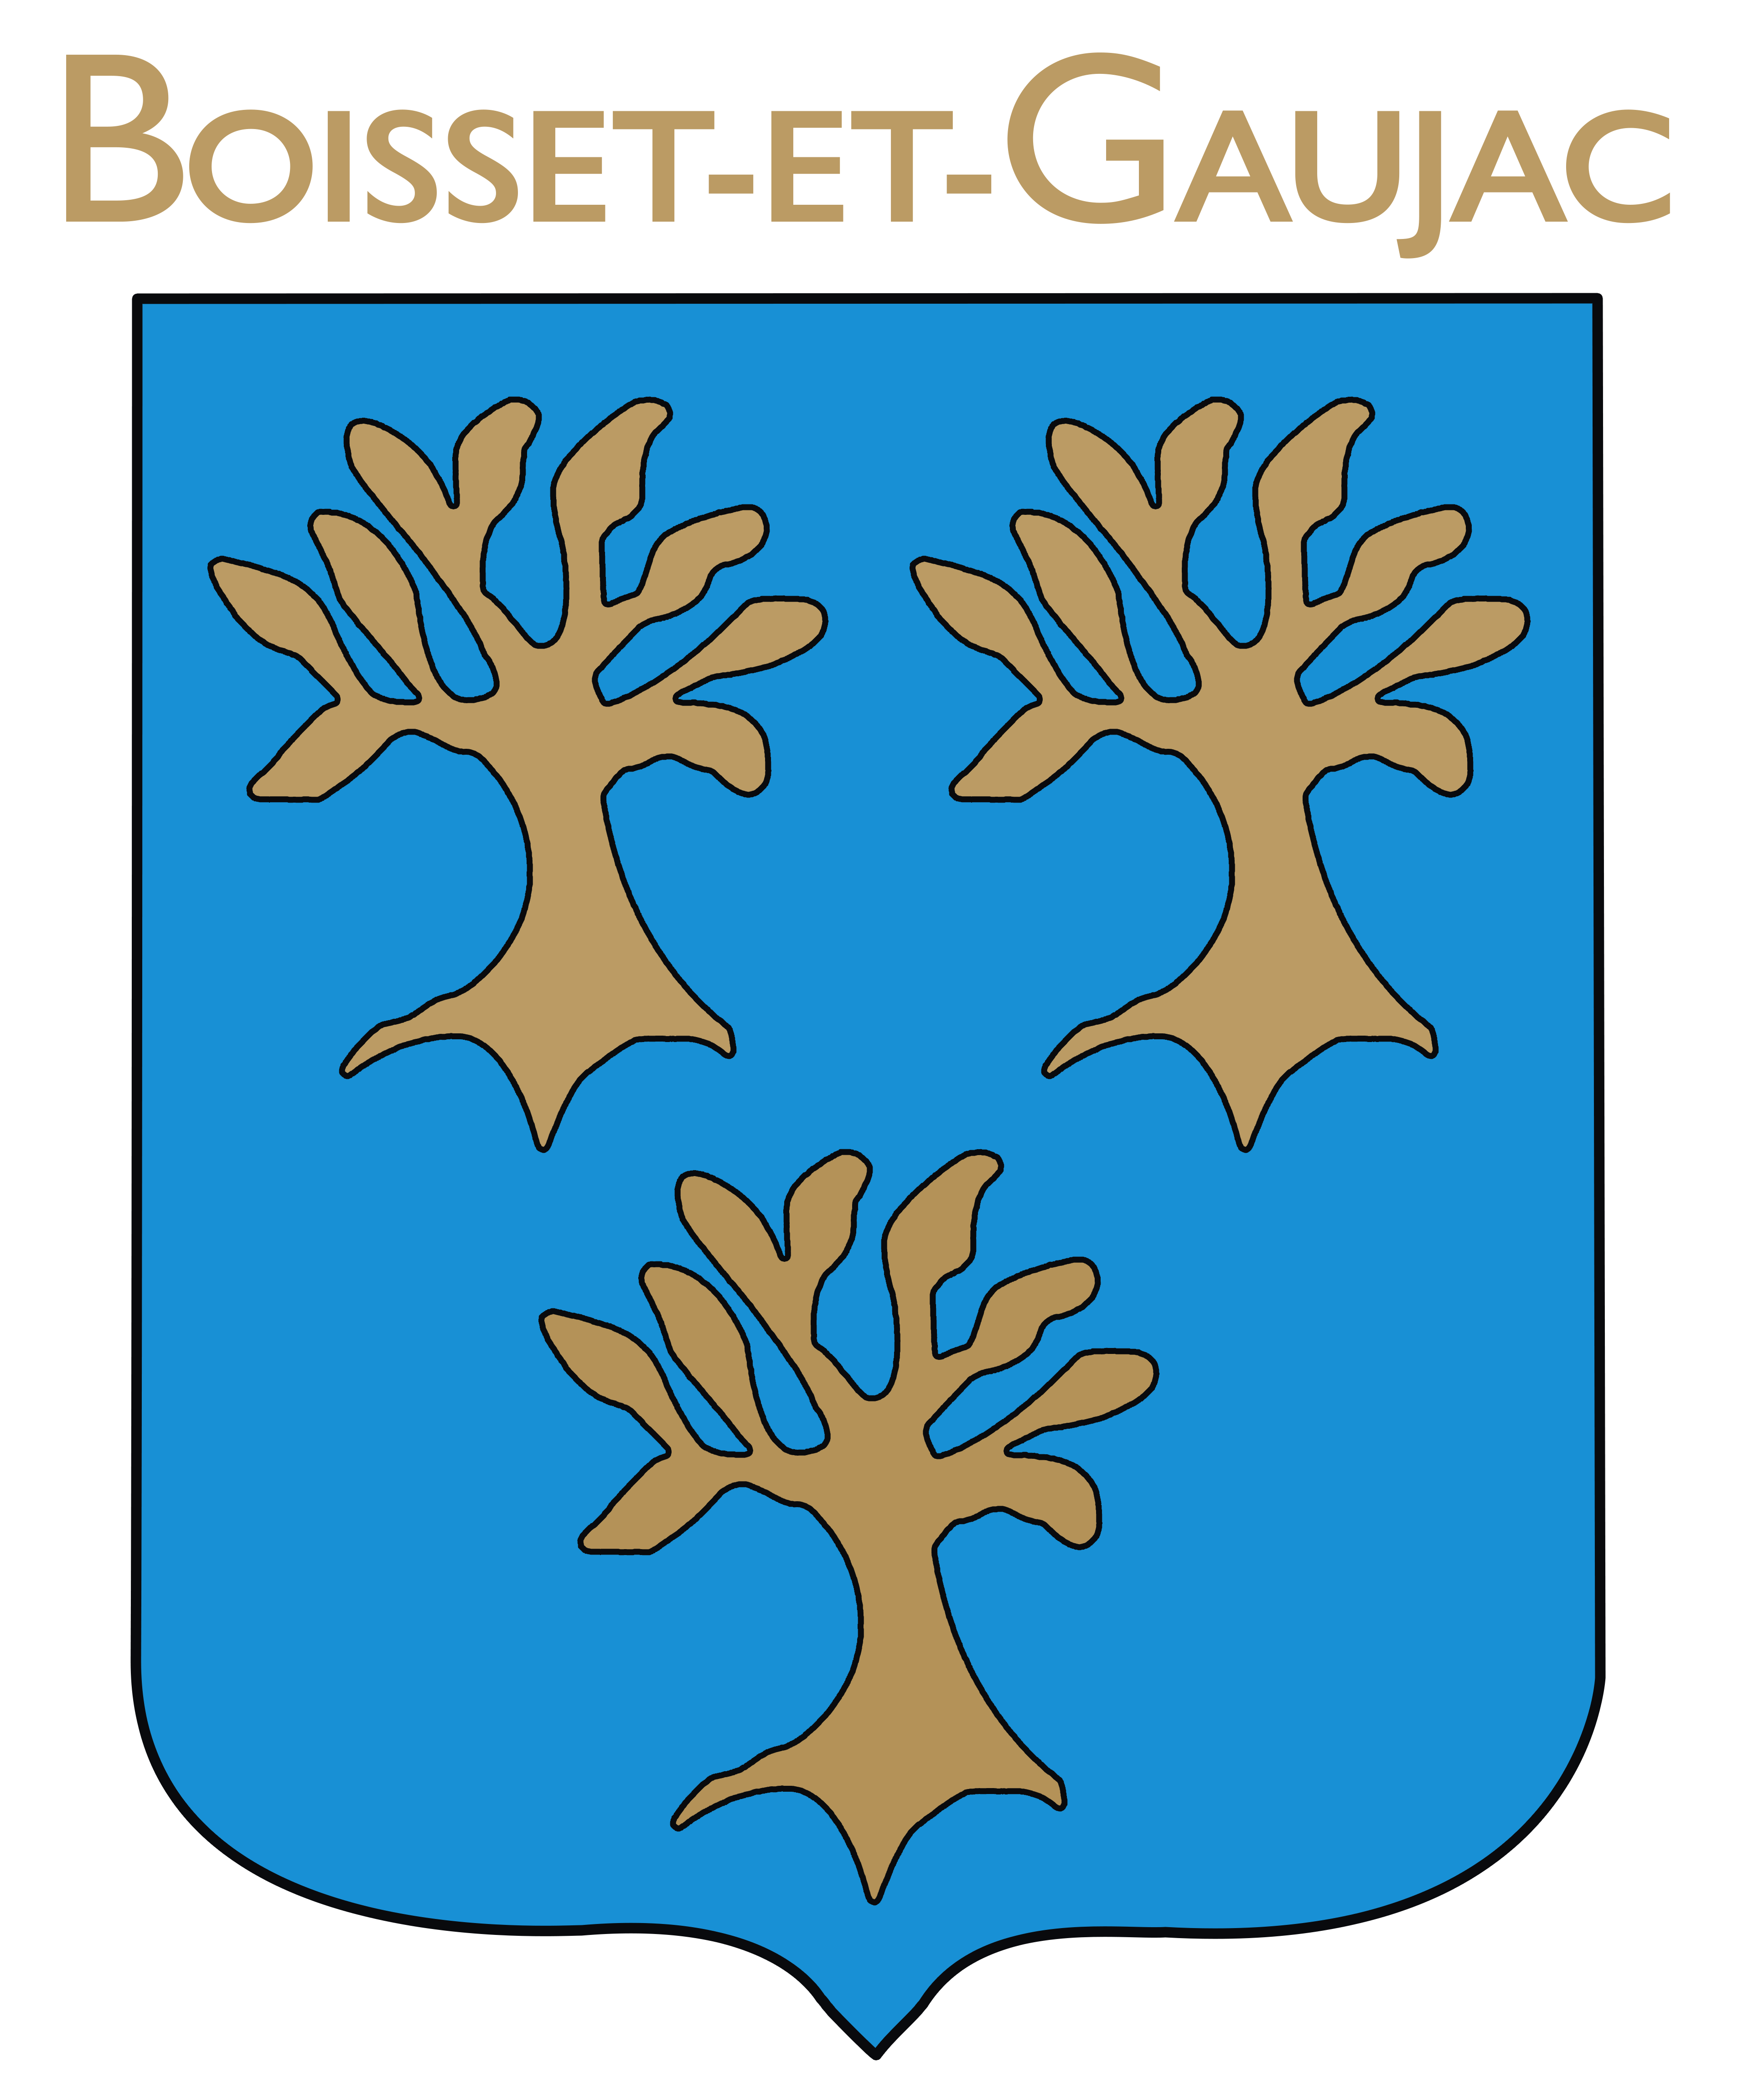 logo Boisset-et-Gaujac